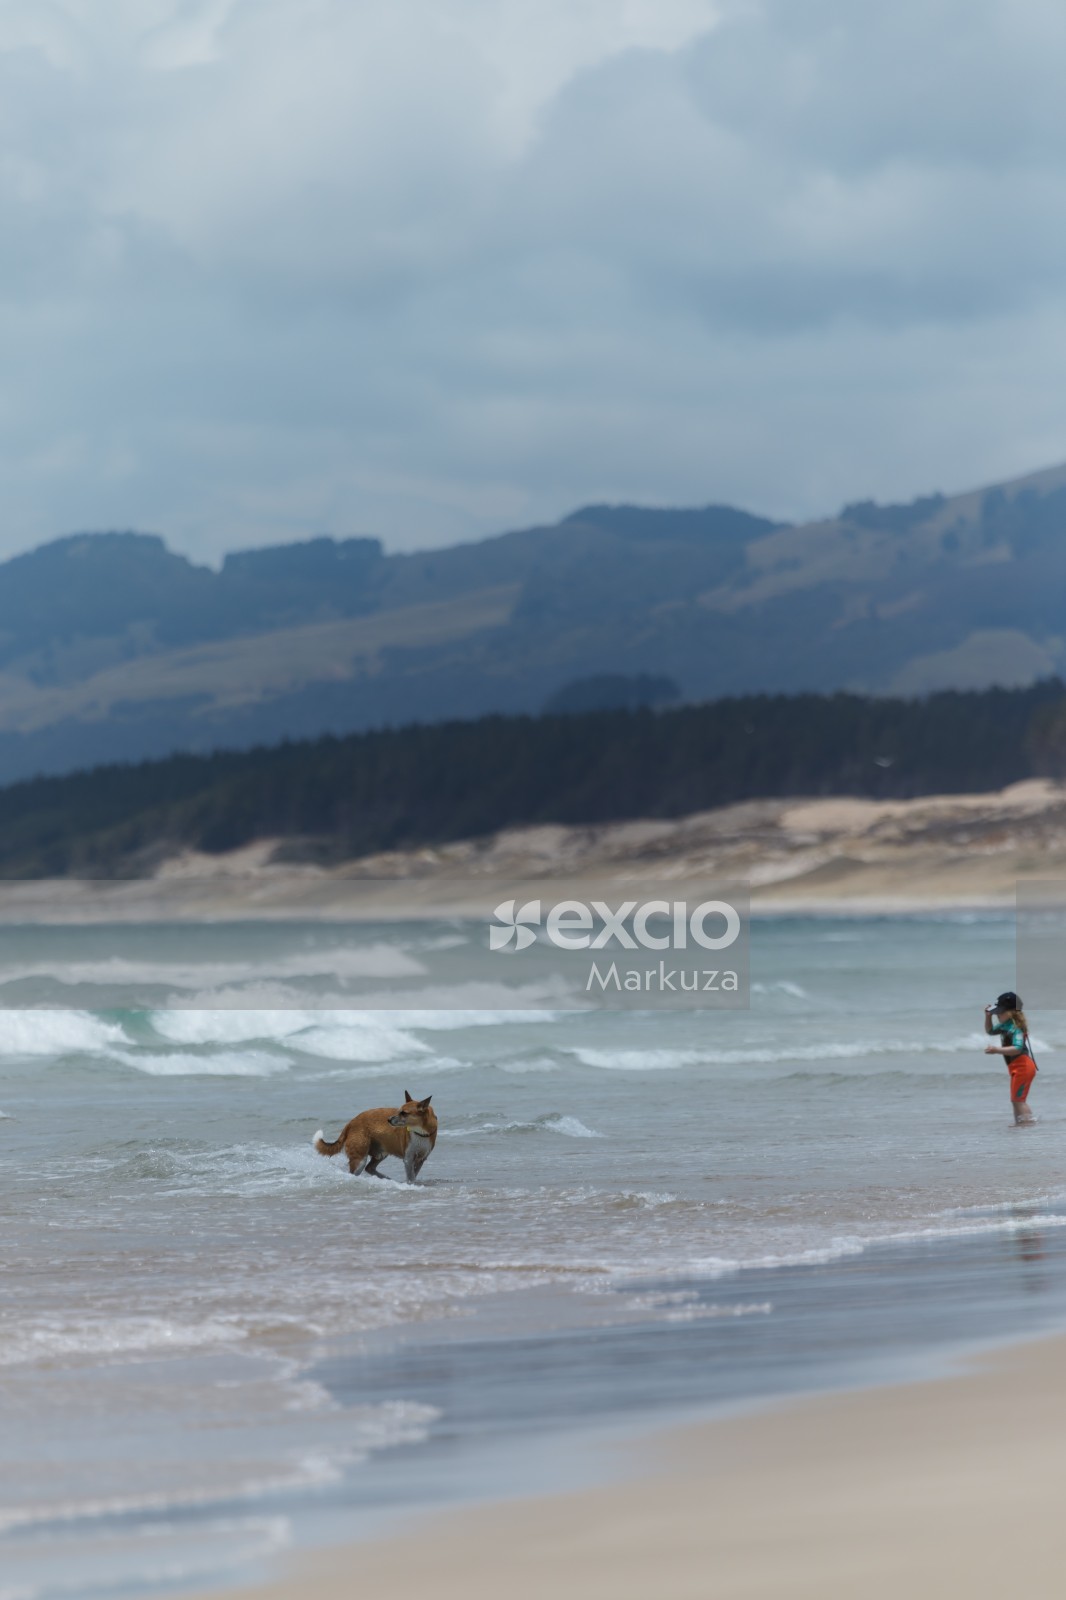 Sea, dog and child